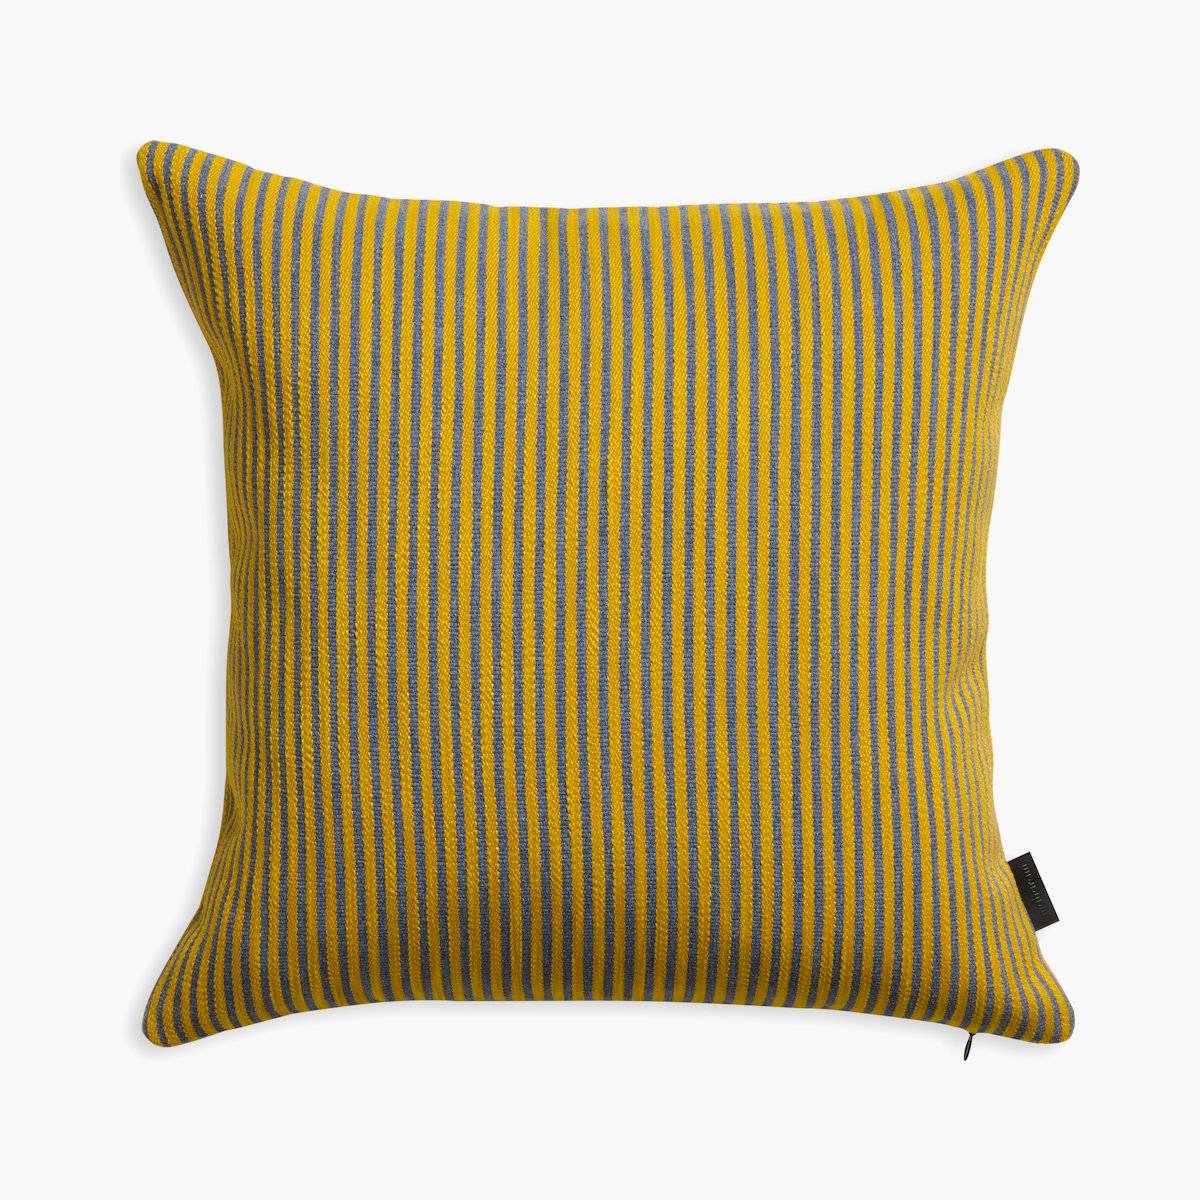 Paul Smith Concord Stripe Indoor/Outdoor Pillow